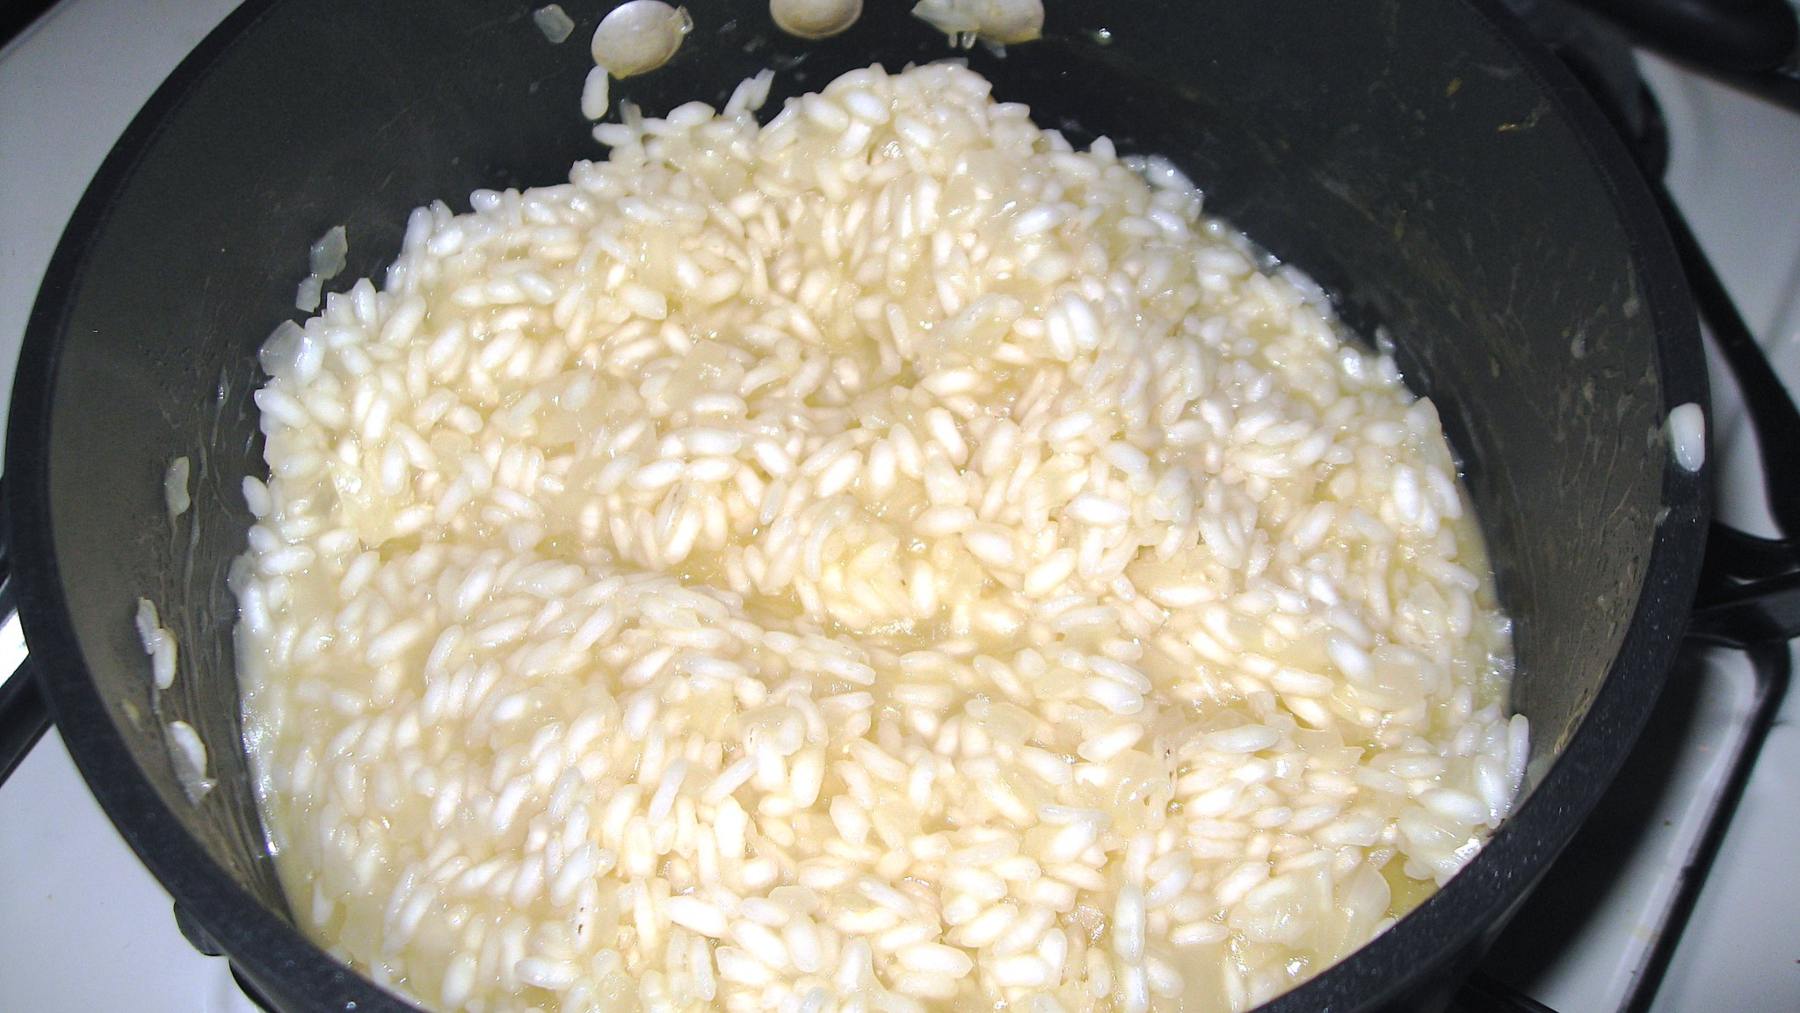 Receta casera de arroz cremoso de limones confitados 4